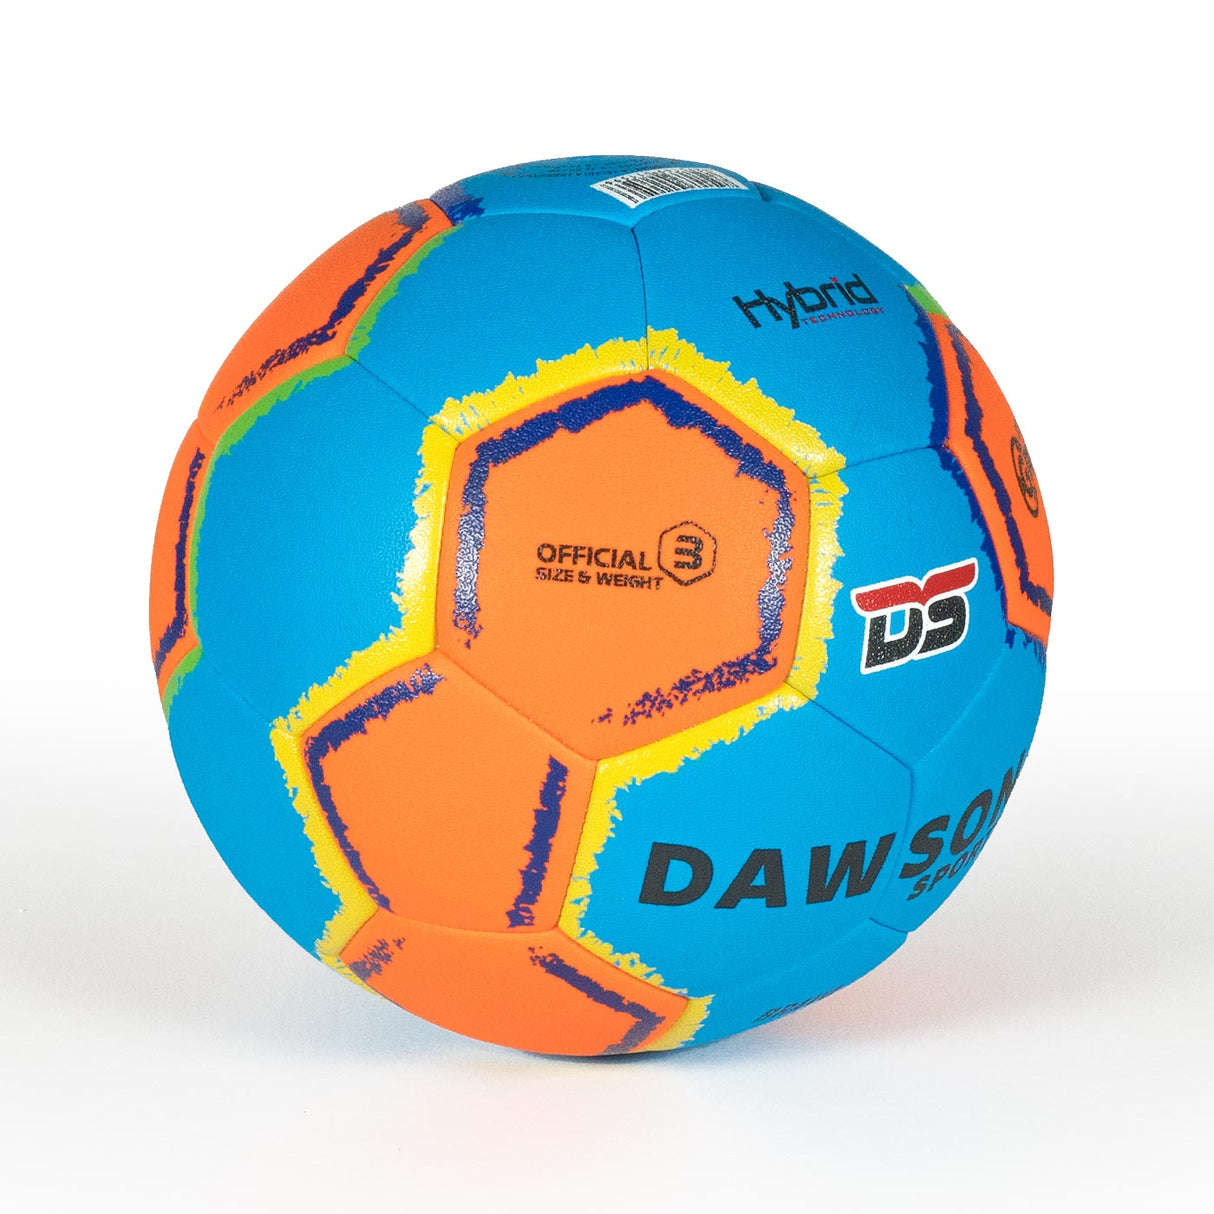 DS Bravo Handball (4 sizes available)